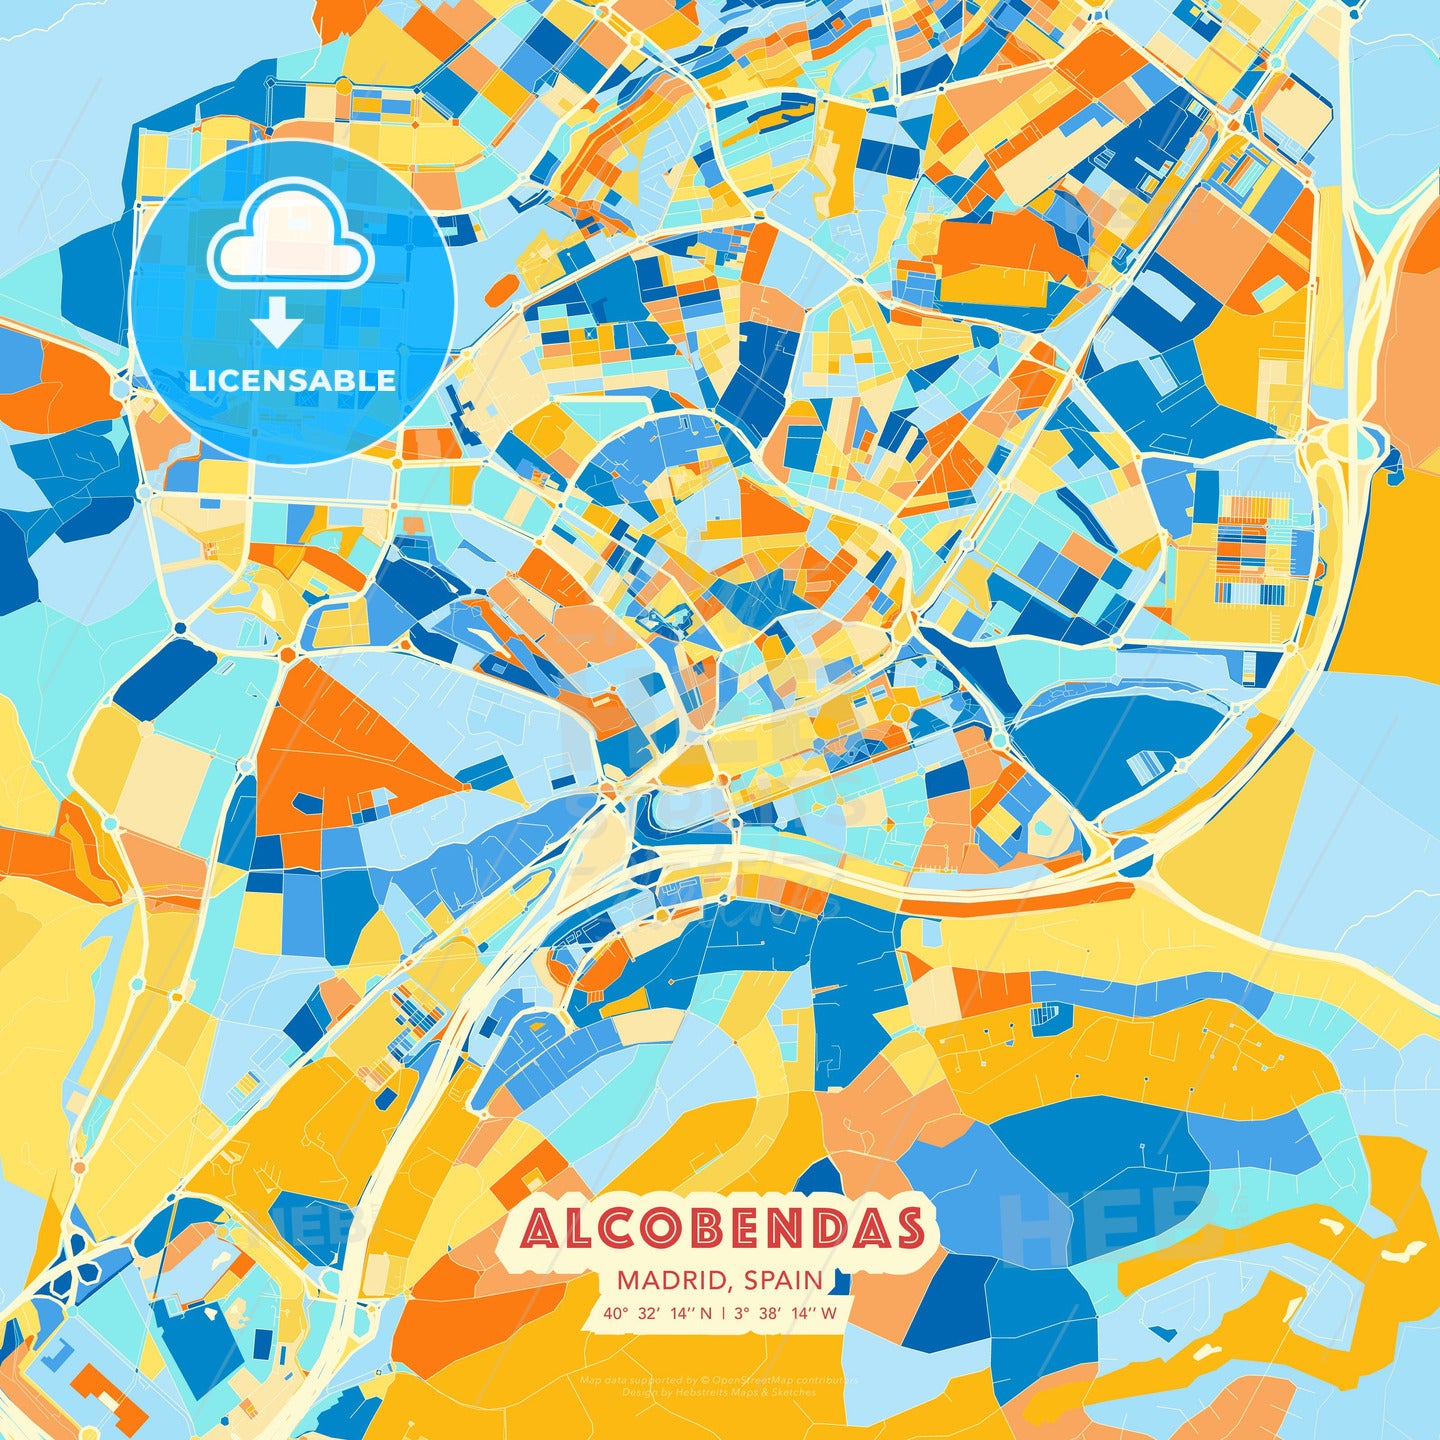 Alcobendas, Madrid, Spain, map - HEBSTREITS Sketches